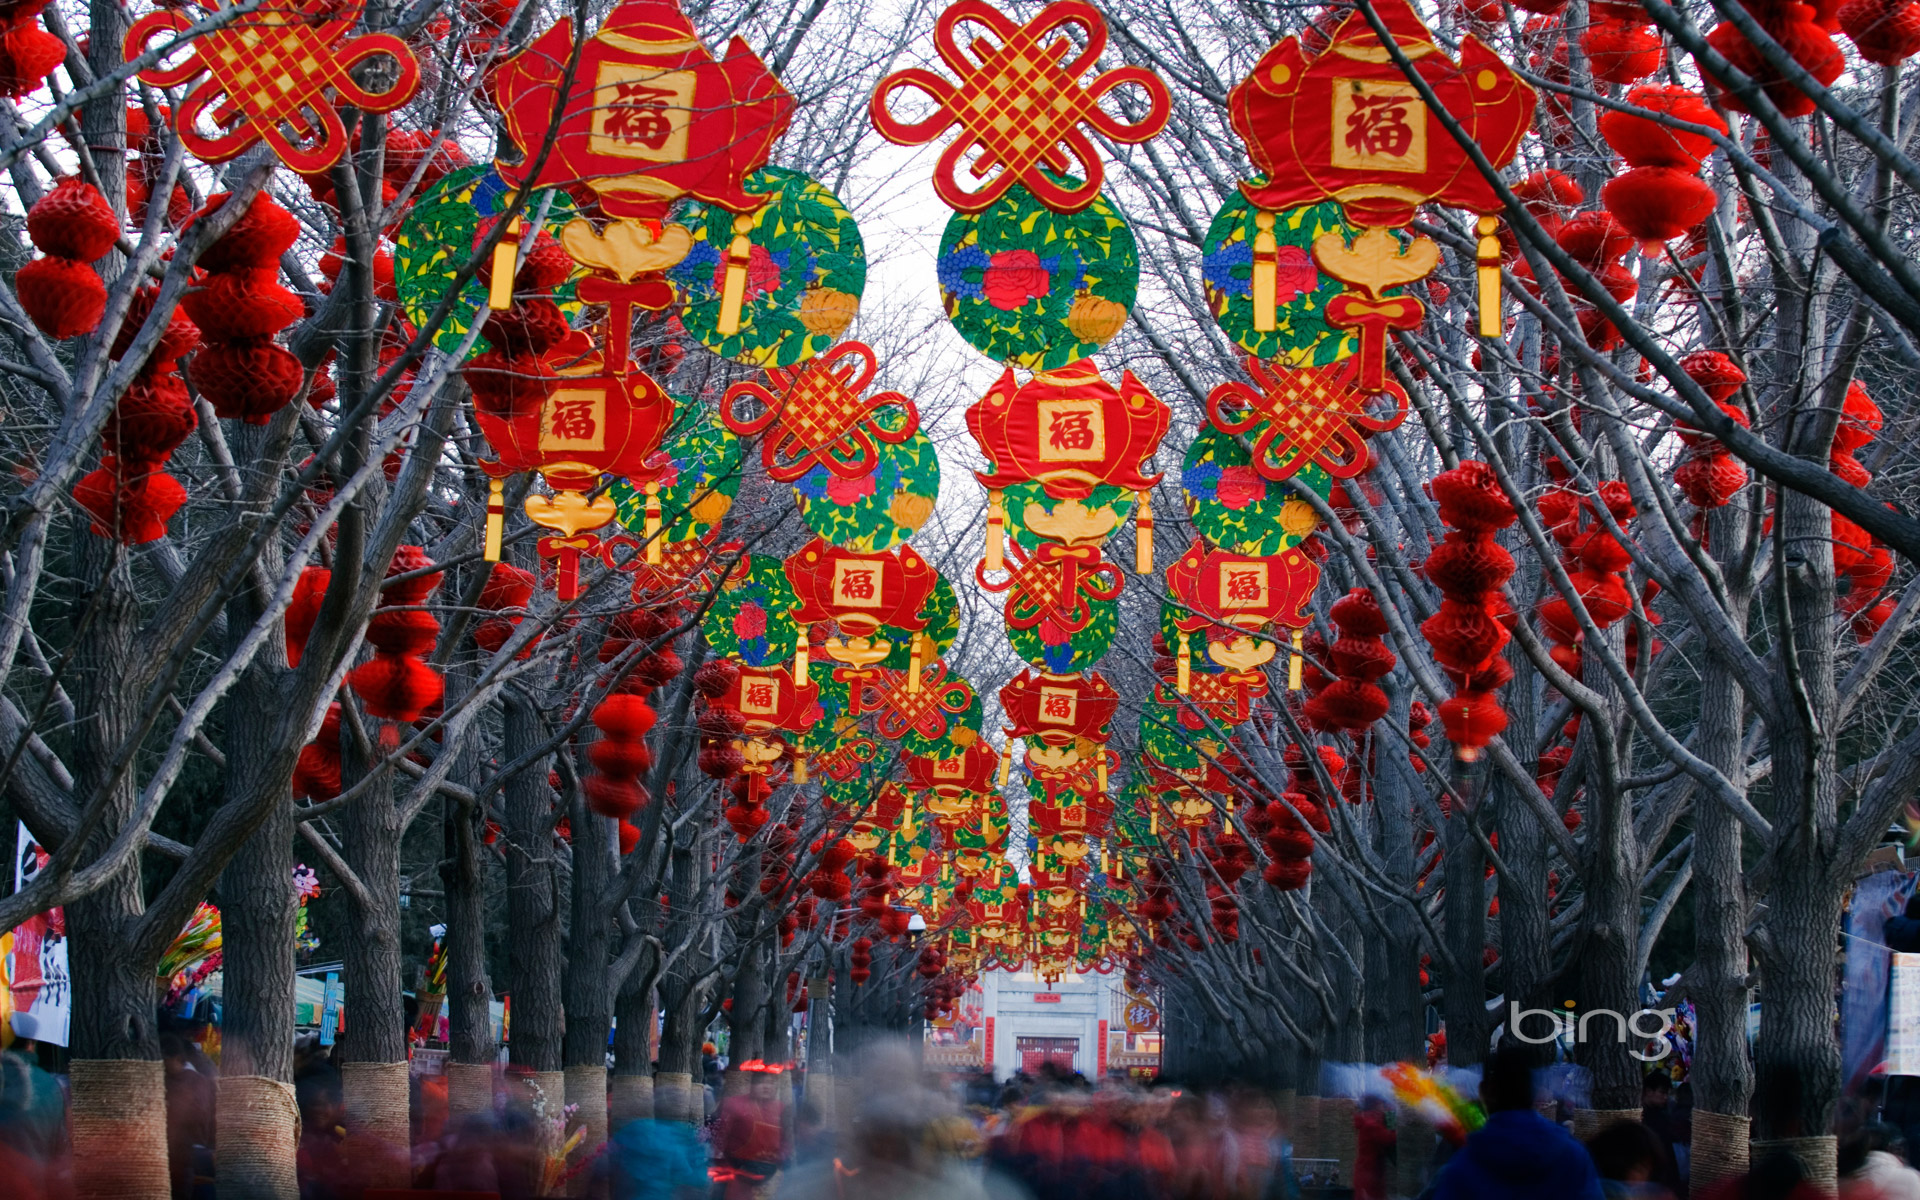 Lantern decorations at Ditan Park temple, Beijing, China